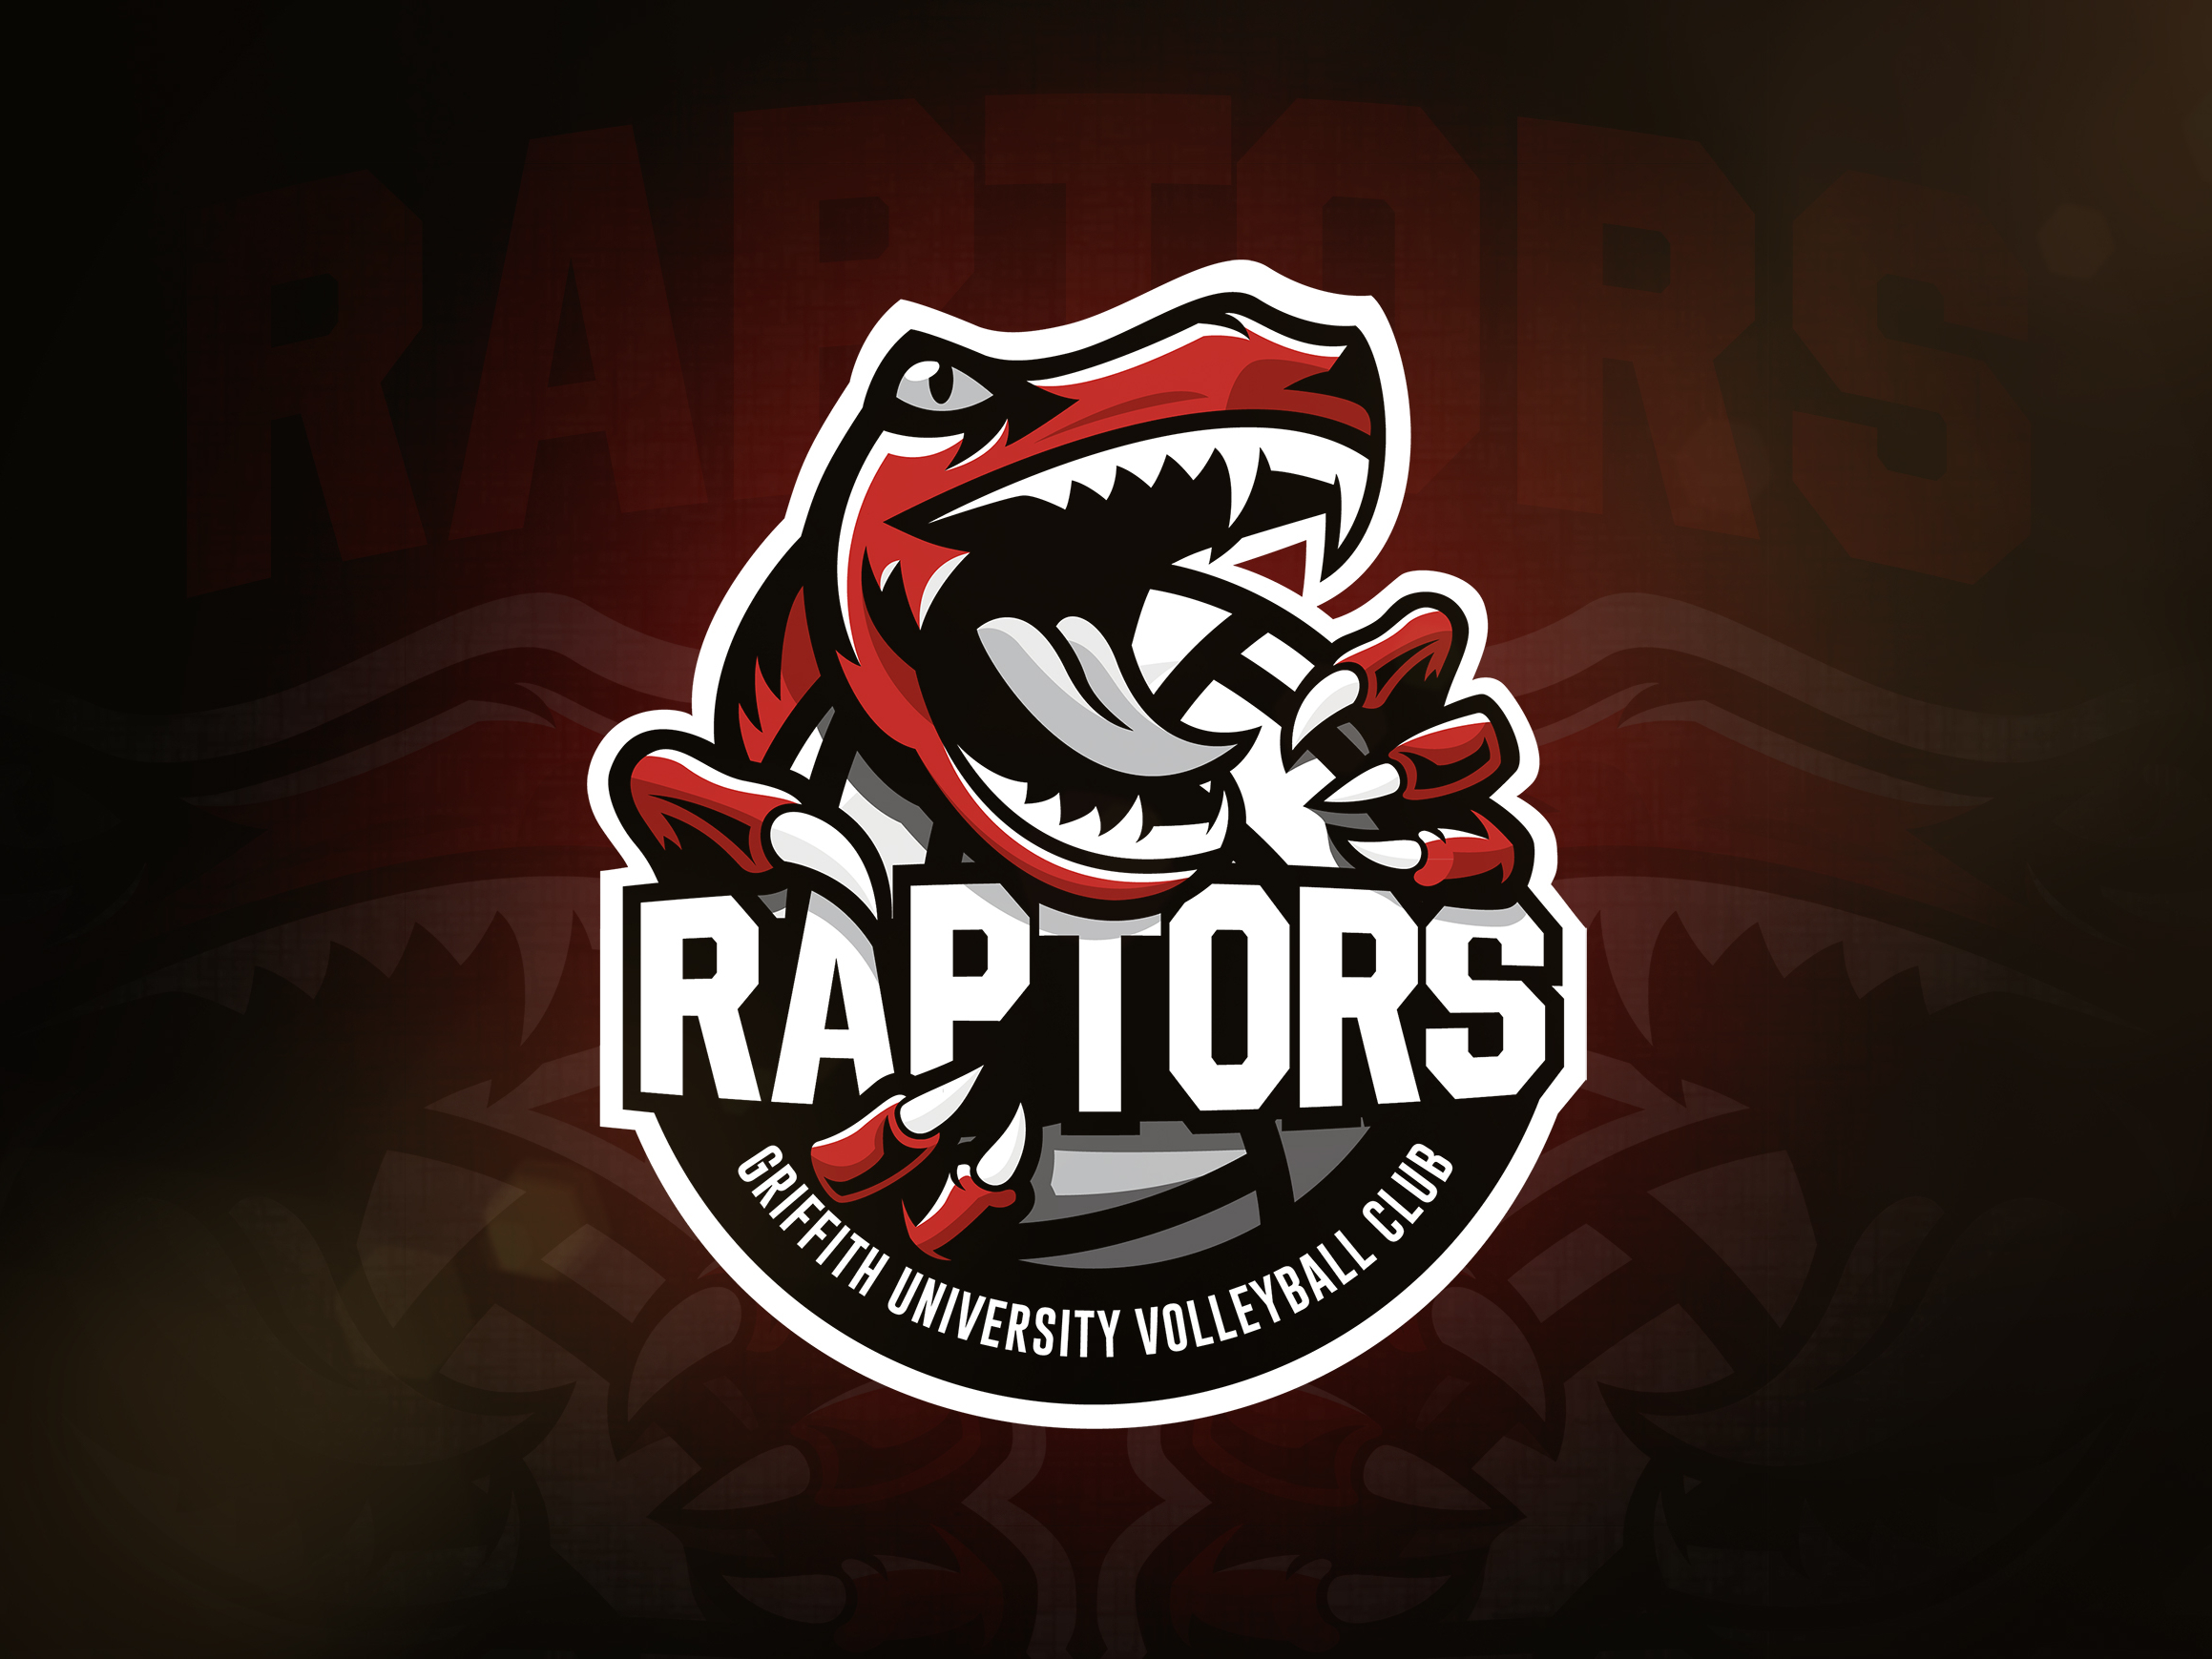 Raptors Volleyball Logo by Jenna Coles on Dribbble